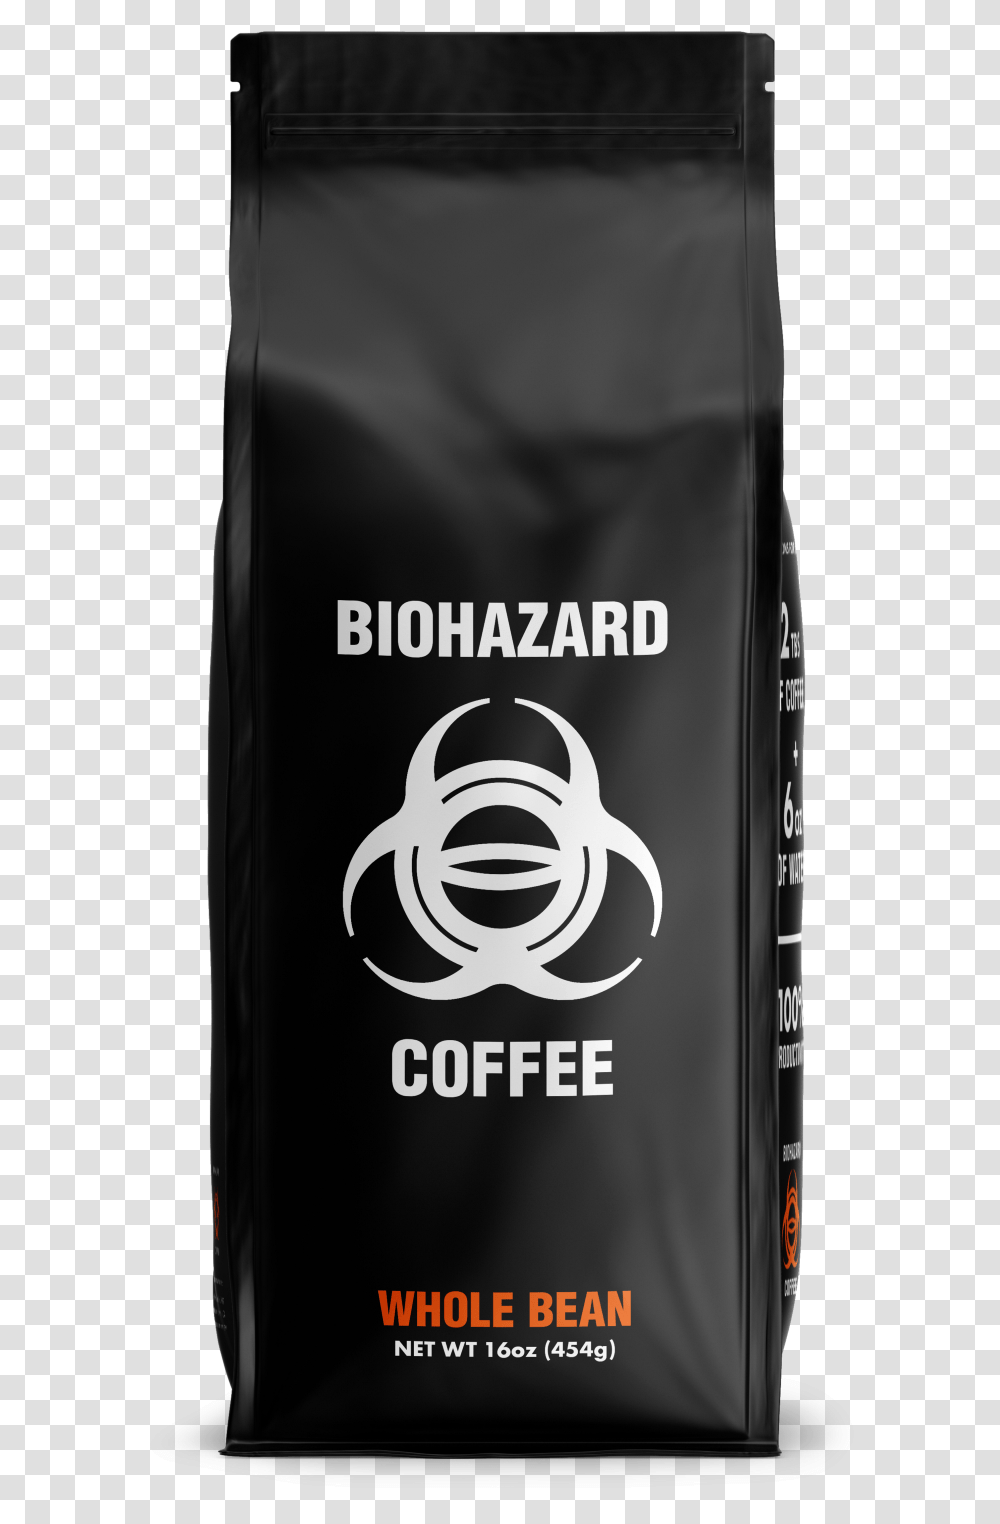 Biohazard Coffee Kapeng Barako, Bottle, Liquor, Alcohol, Beverage Transparent Png